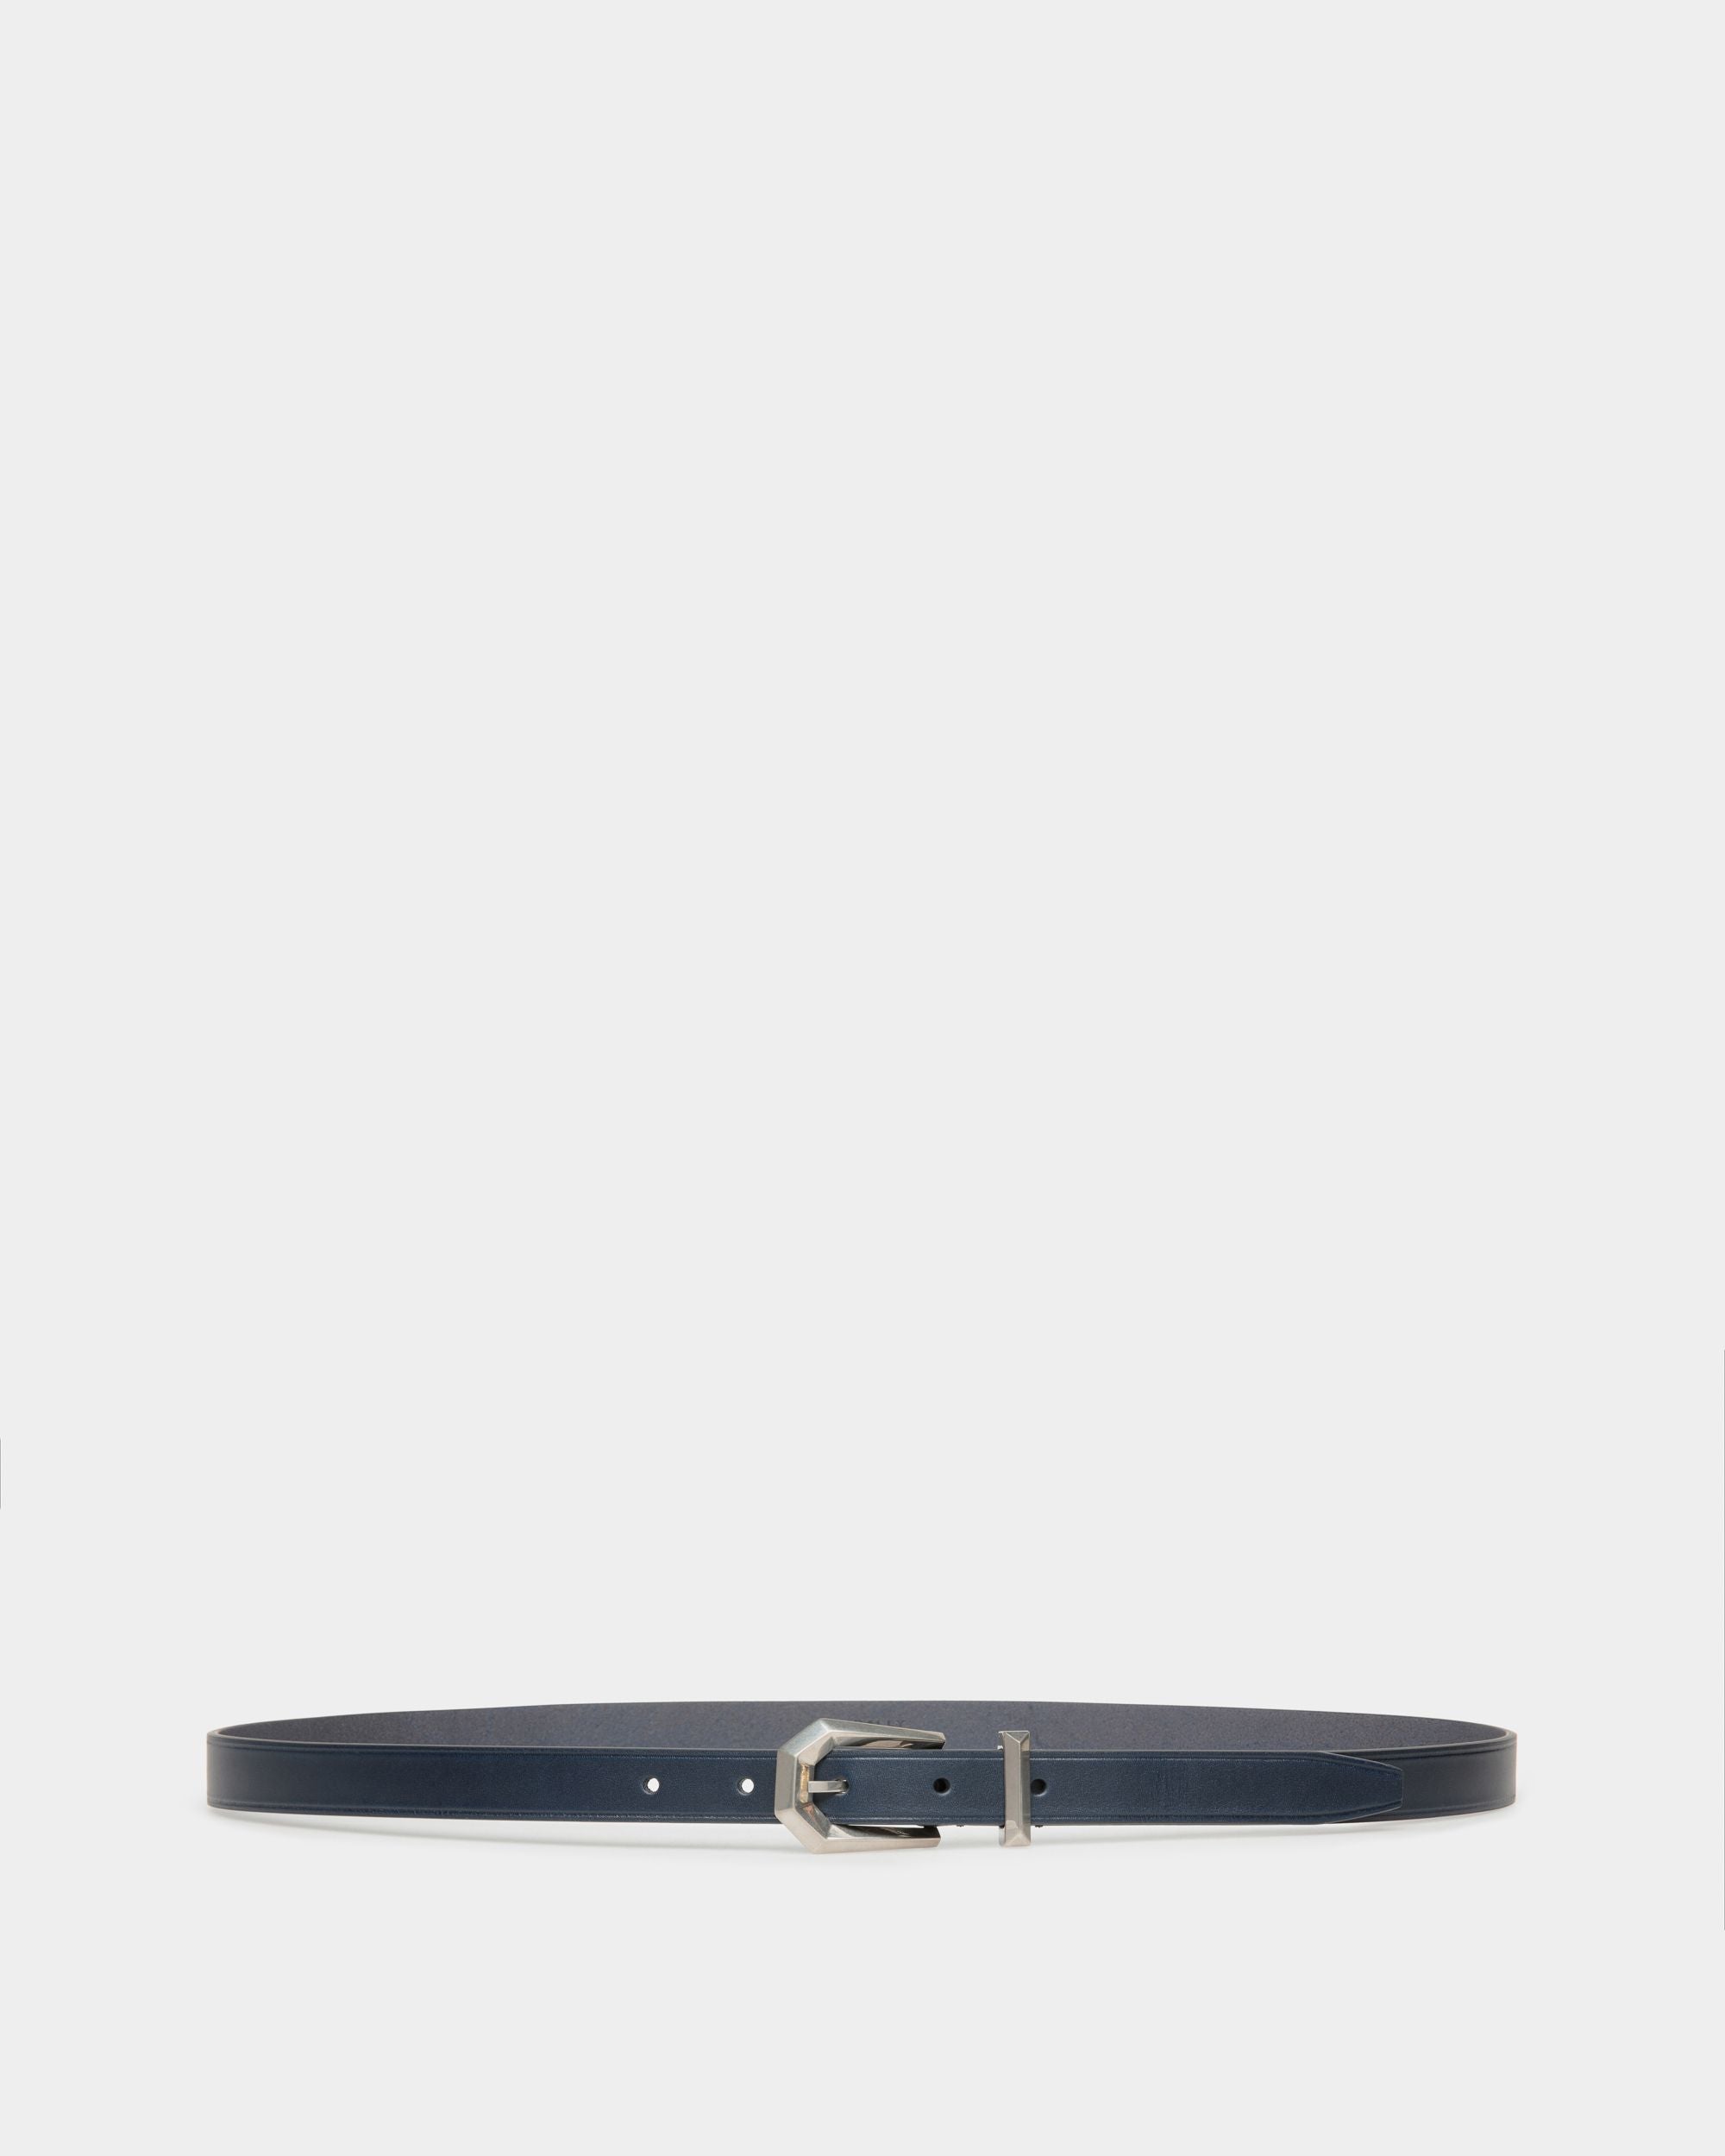 Prisma 20mm | Men's Belt in Navy Blue Leather | Bally | Still Life Front